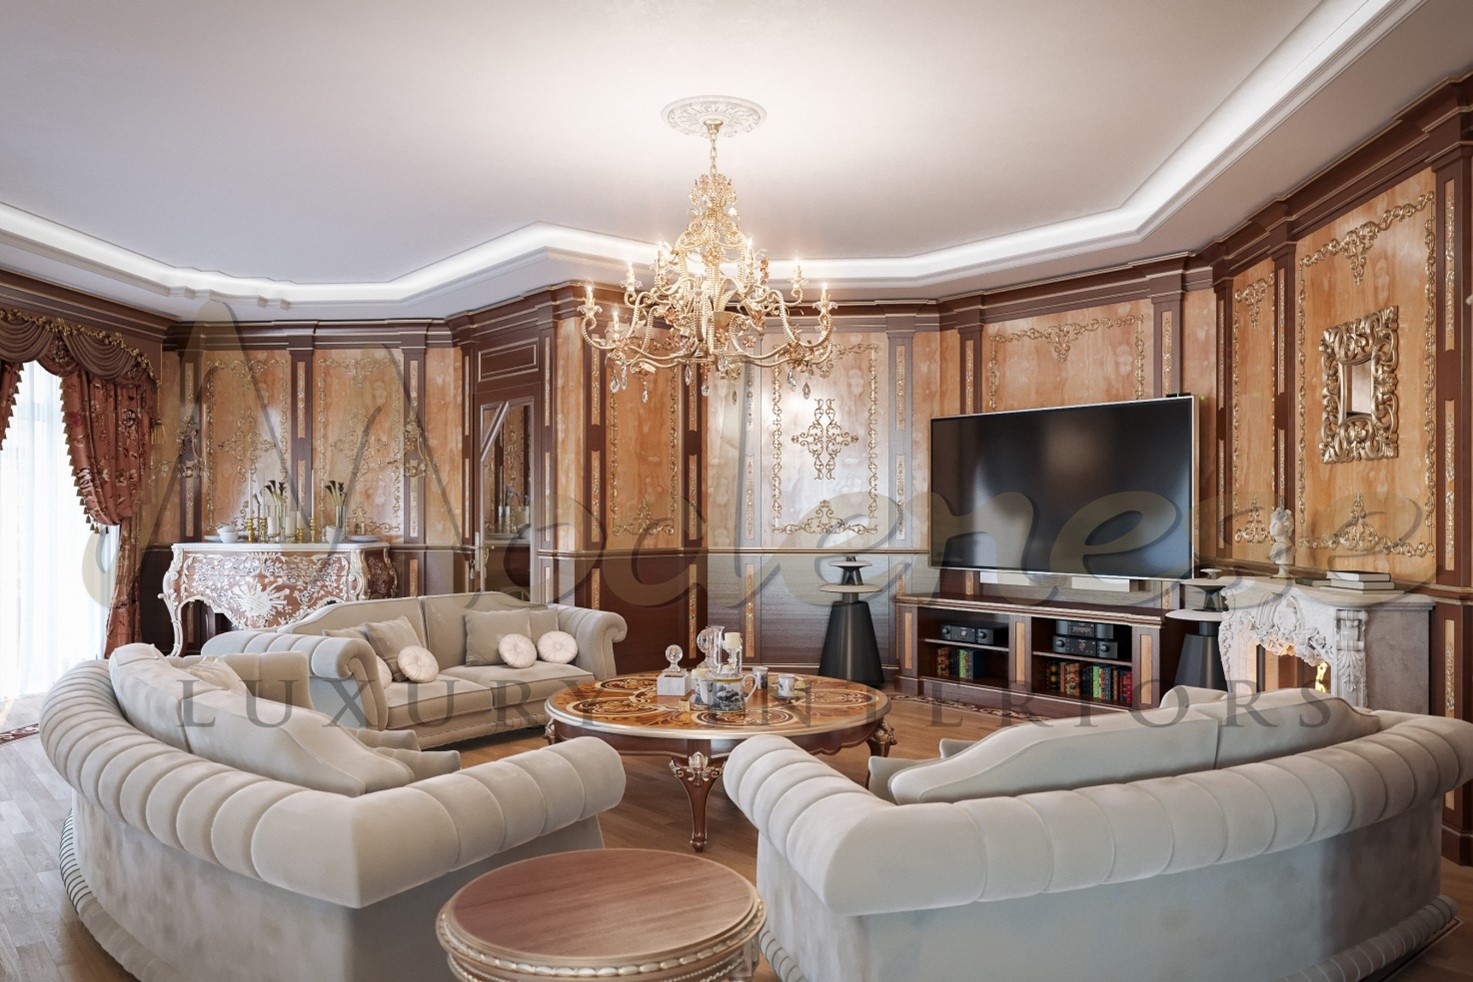 Perfect Room Design From Italian Designers